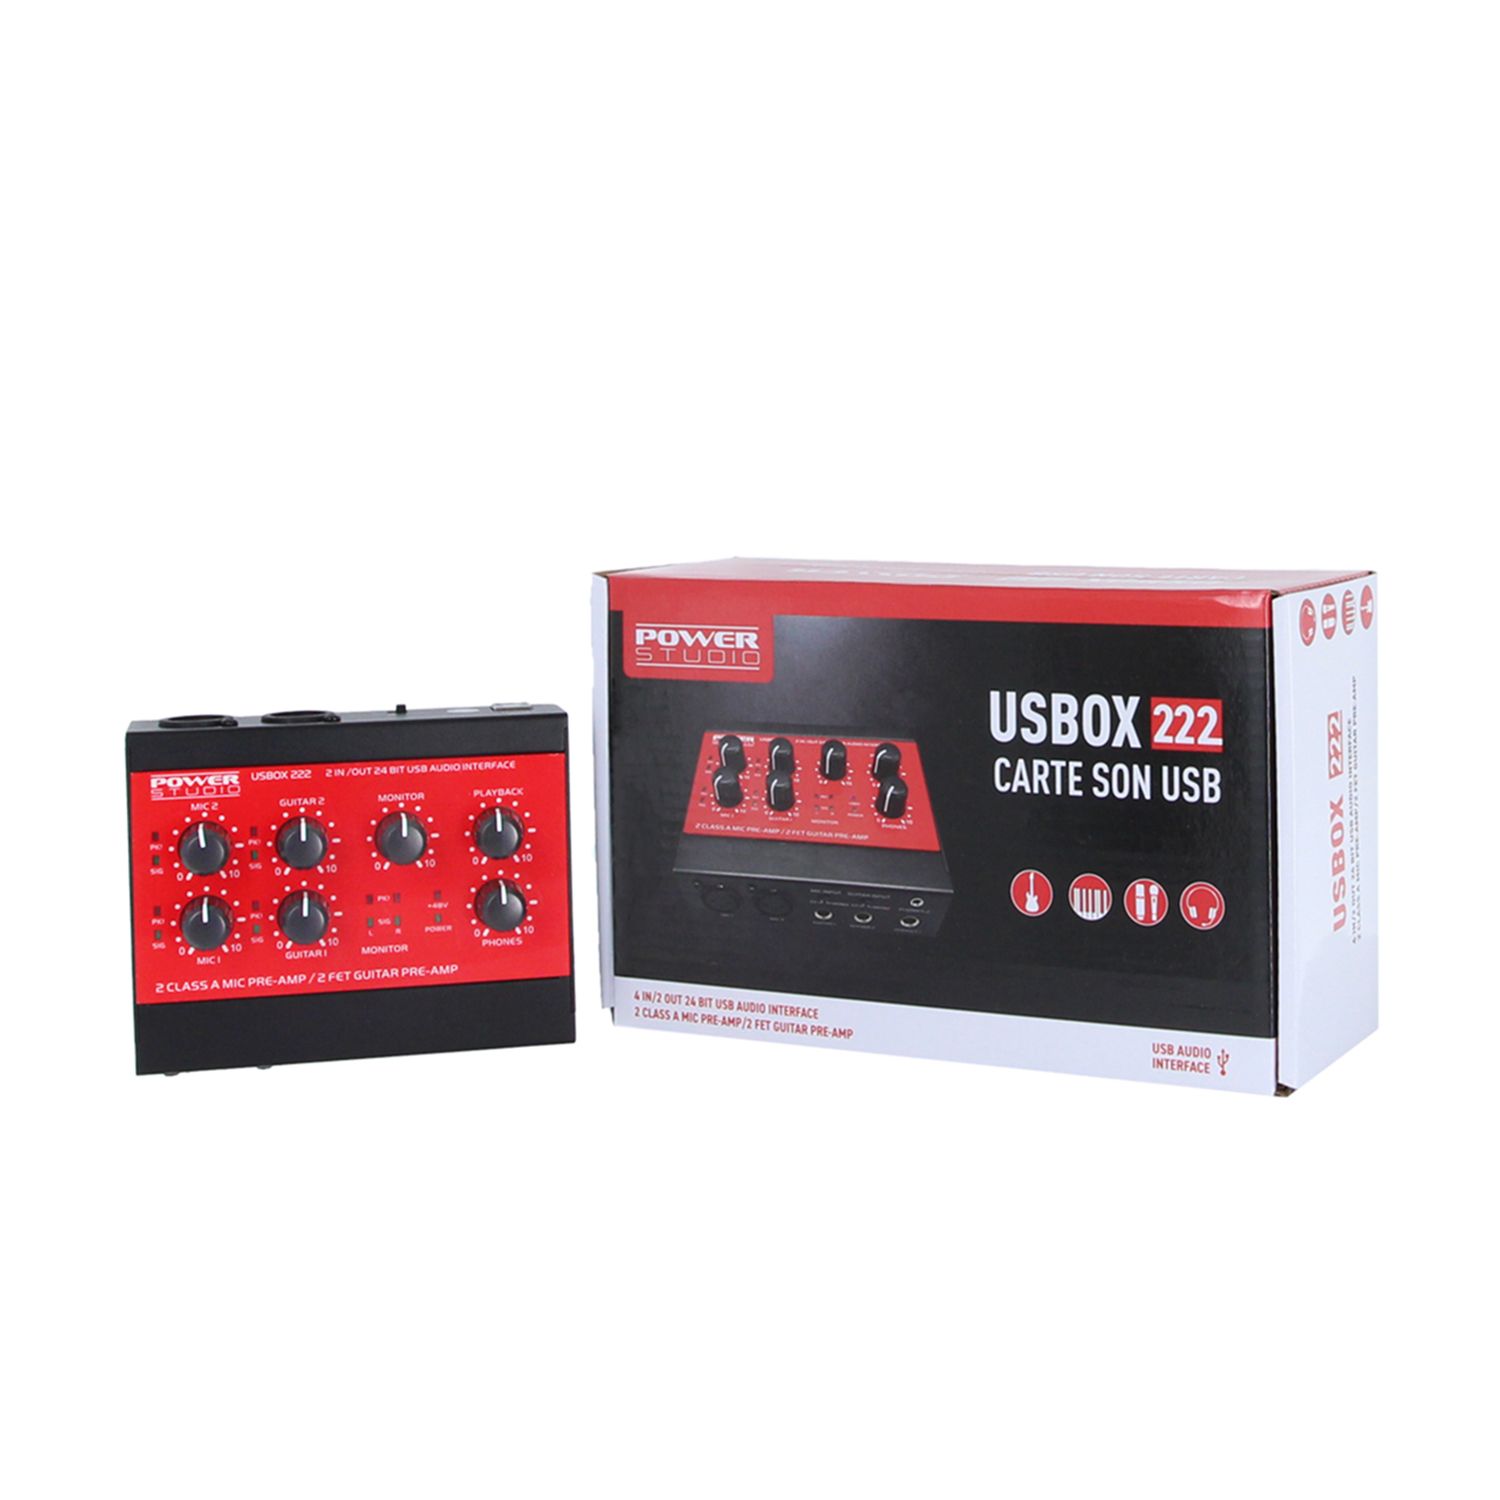 Power Studio Usbox 222 - Carte Son Usb - Variation 4